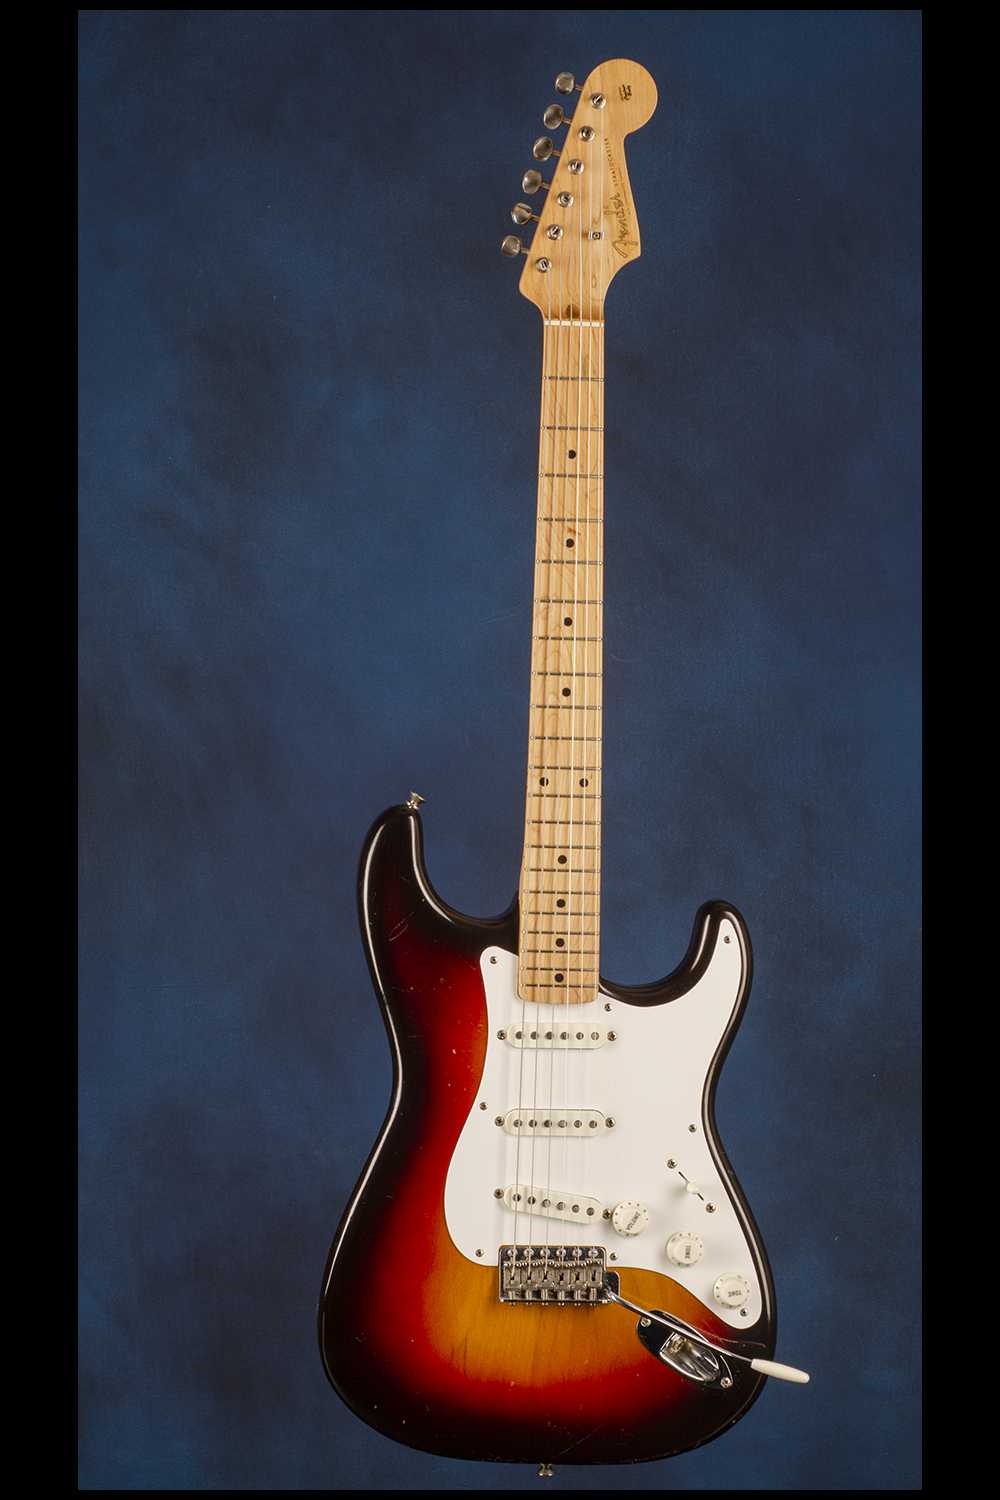 Vintage! 1976 Fender Stratocaster 3-Bolt Double-Cut Electric